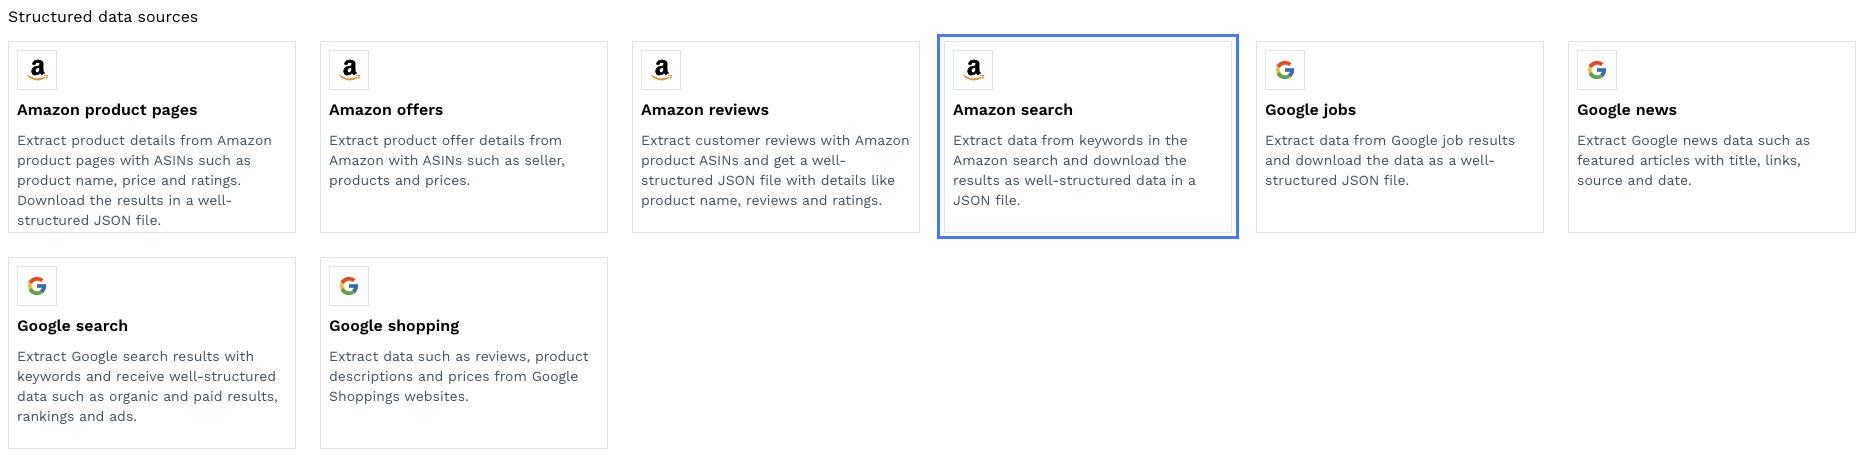 Amazon search